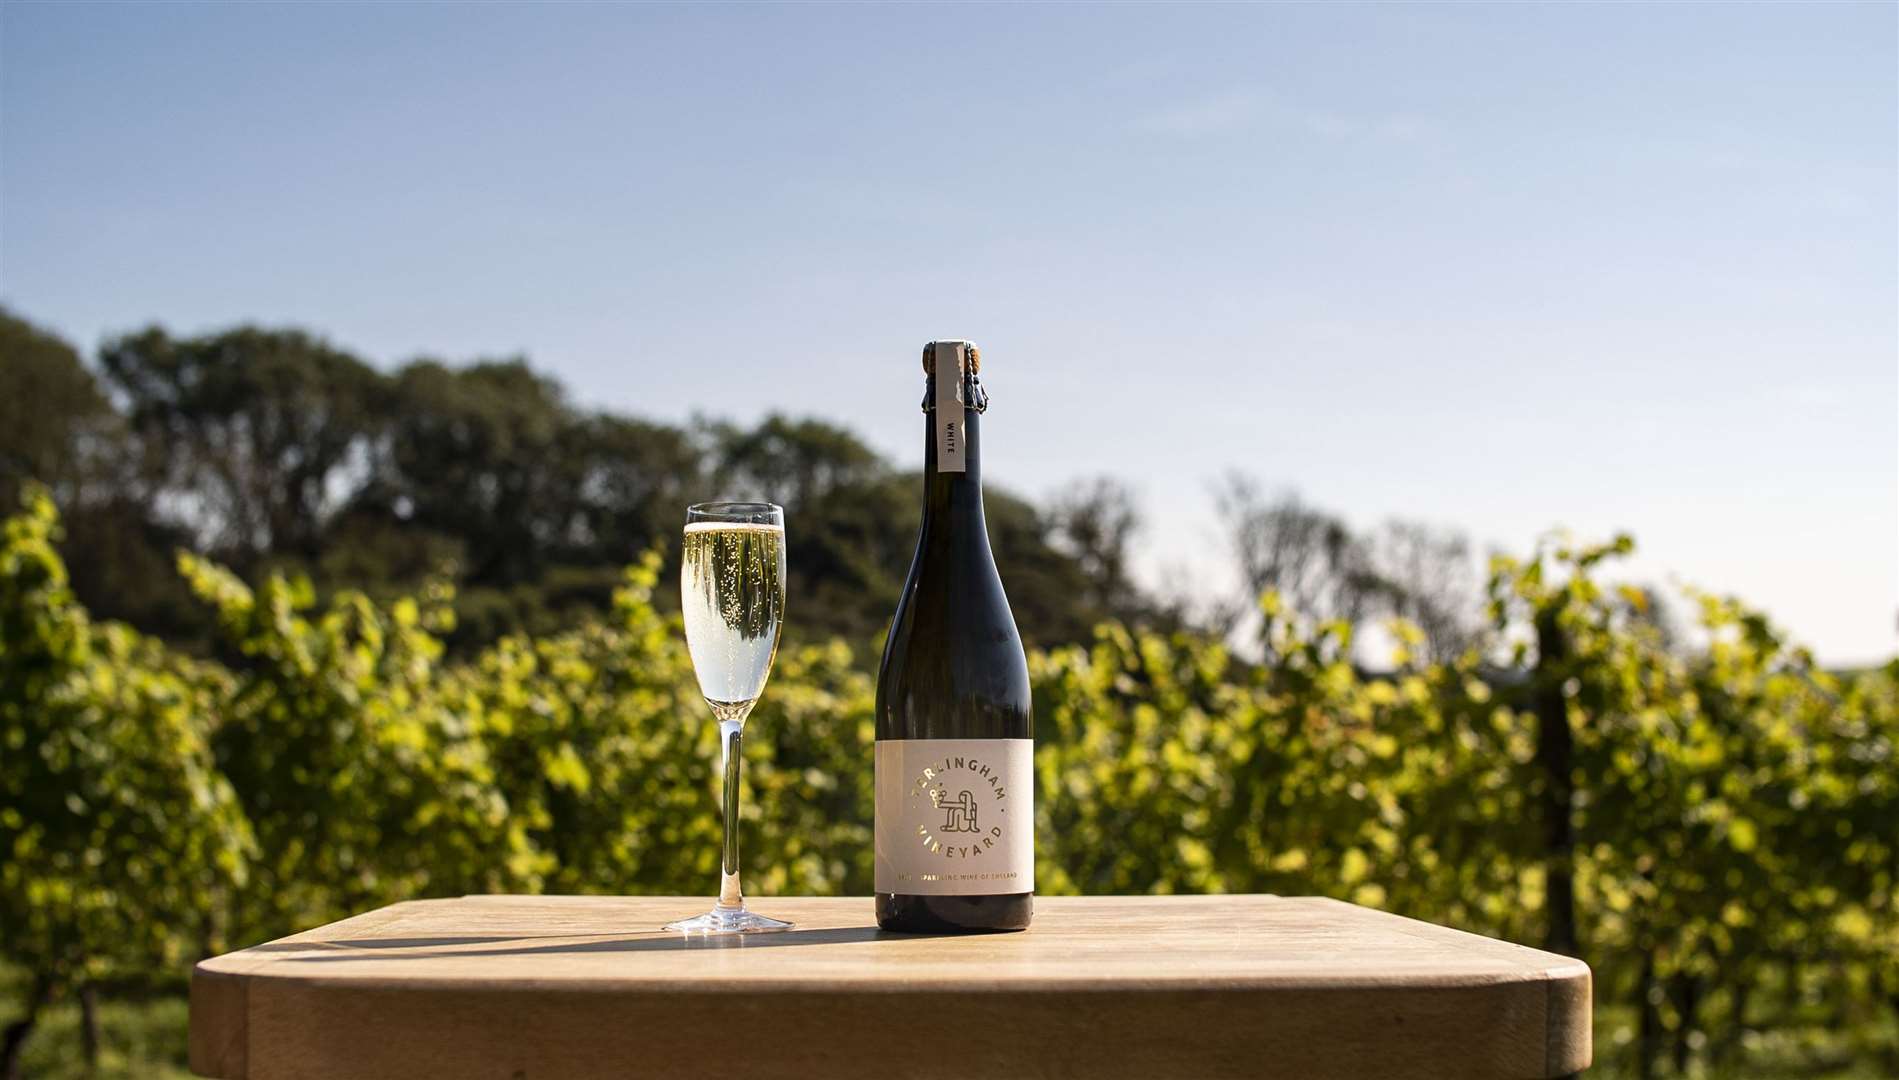 Enjoy a glass of wine overlooking the vineyard at Terlingham. Picture: Terlingham Vineyard